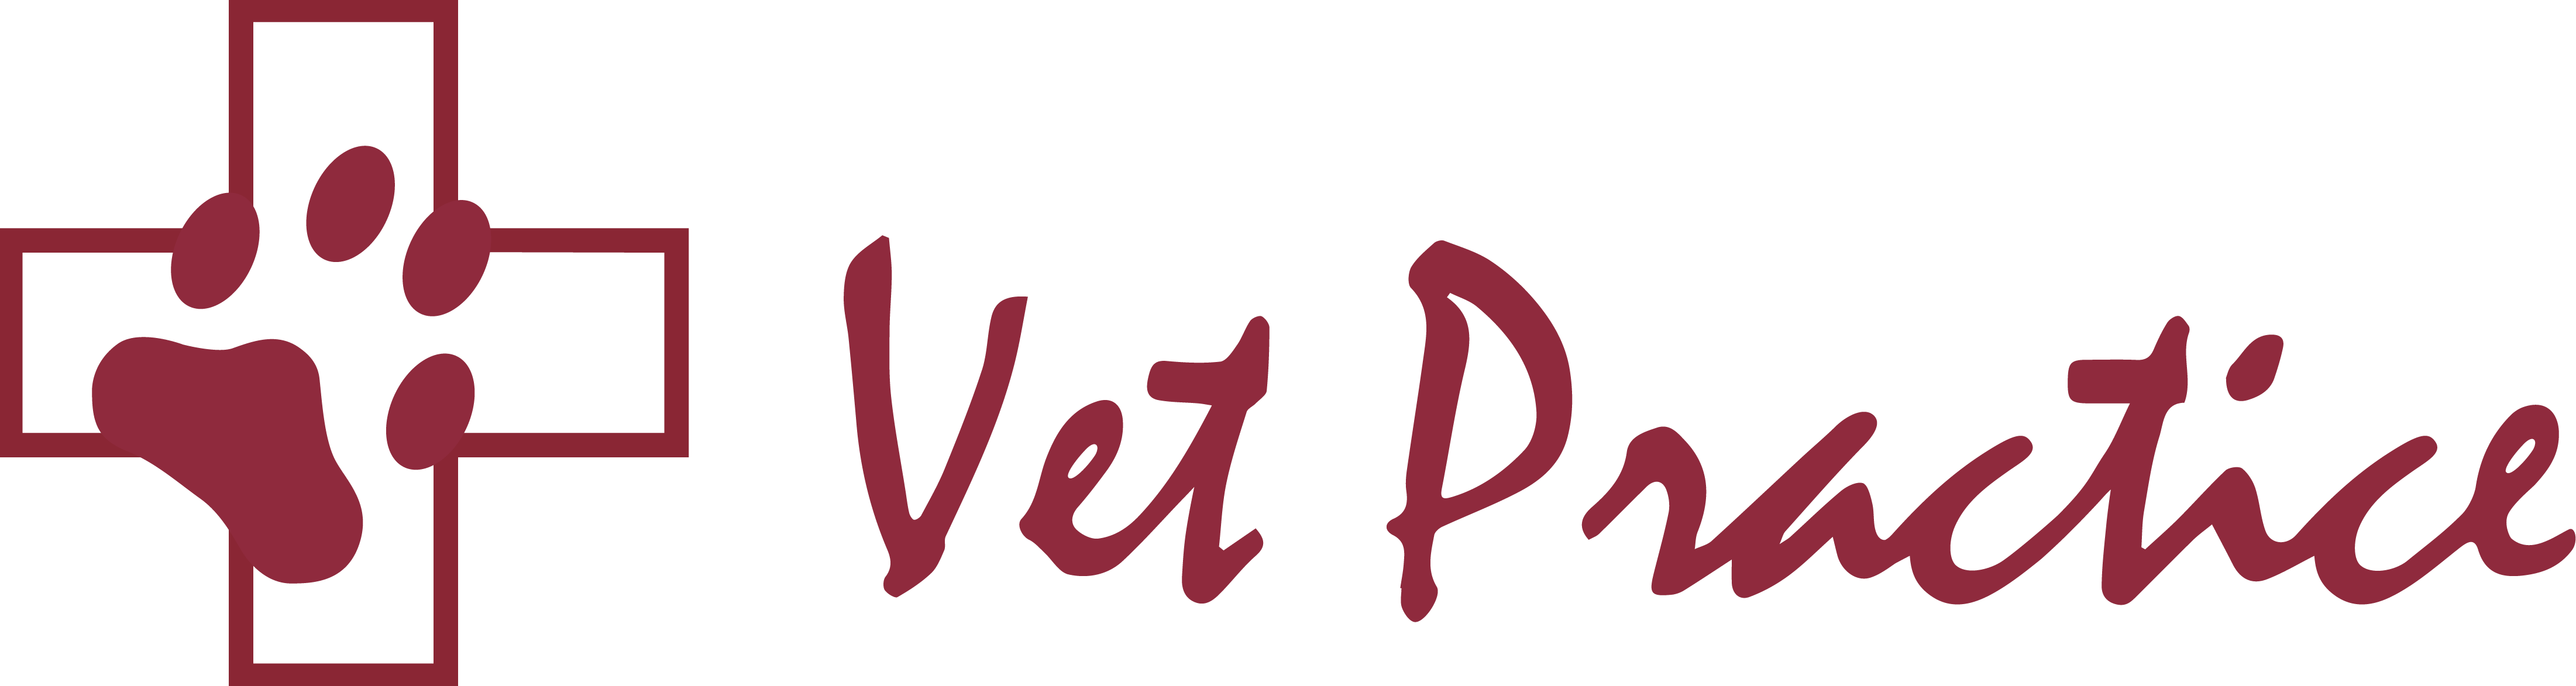 Vet Practice Pte Ltd